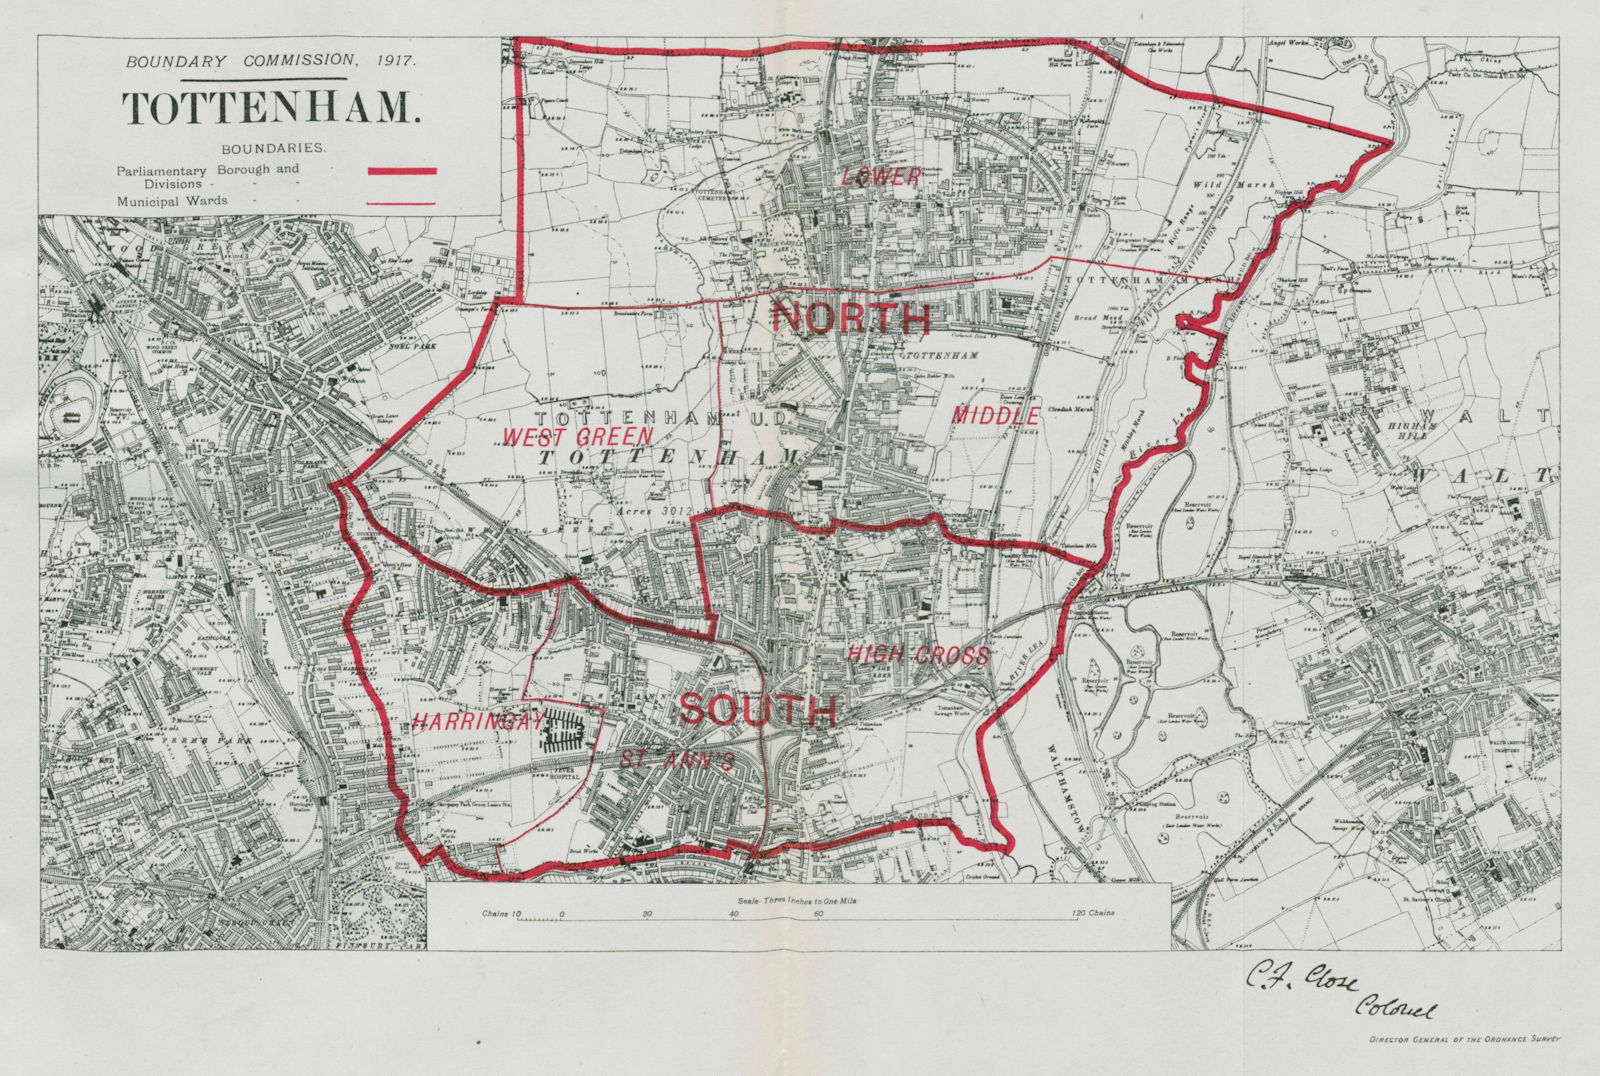 Tottenham Parliamentary Borough. Harringay London. BOUNDARY COMMISSION 1917 map